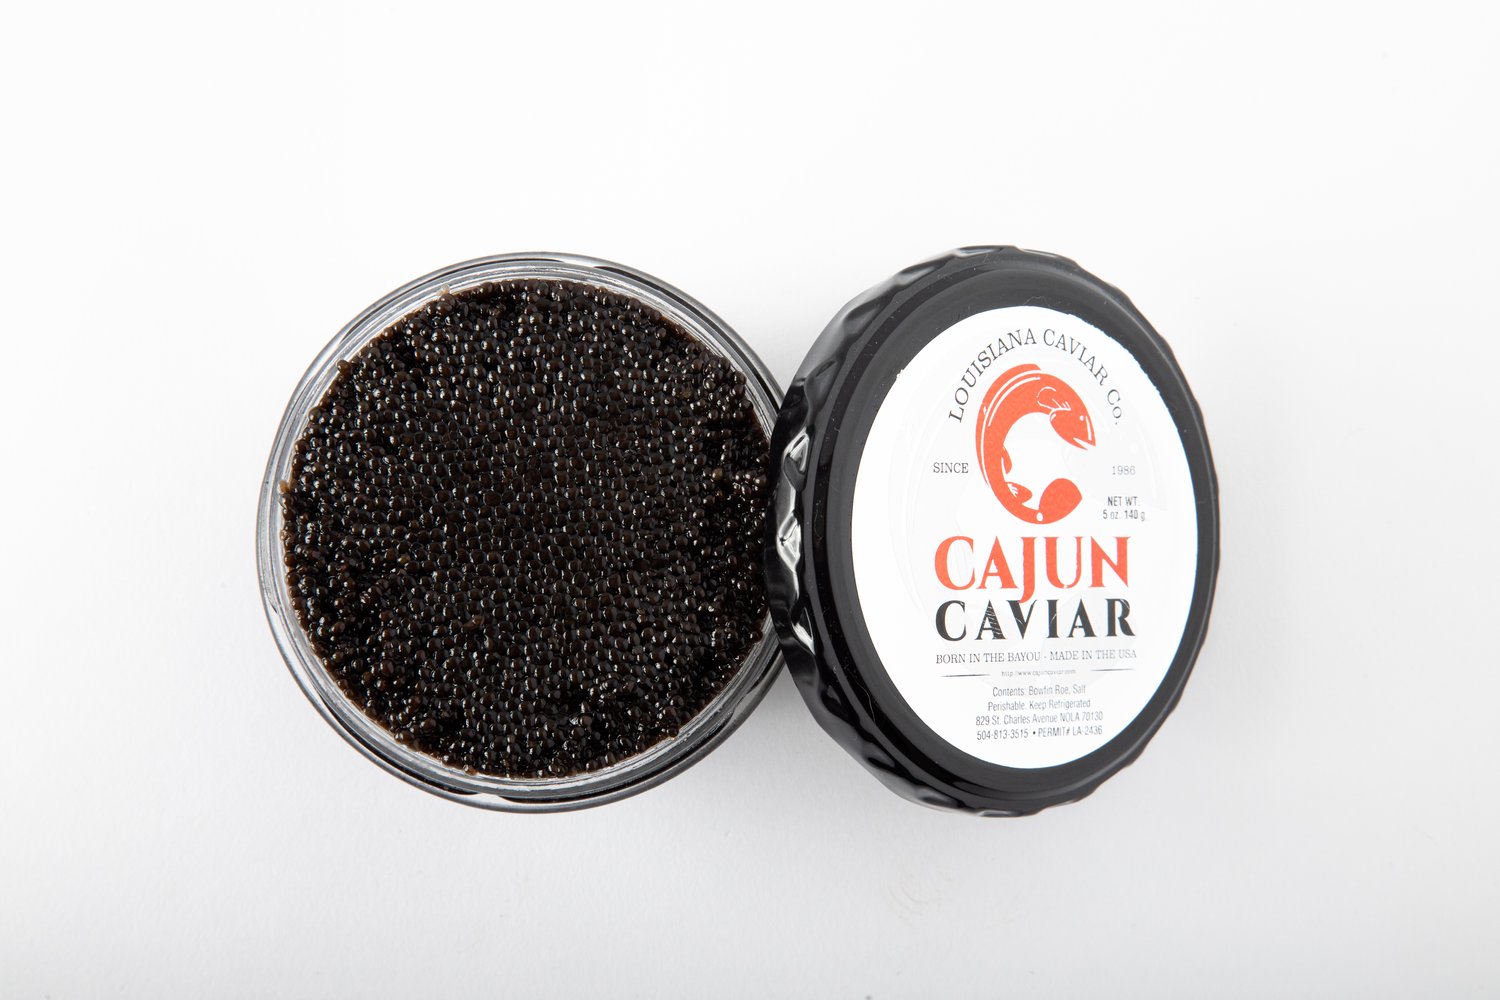 Black Caviar